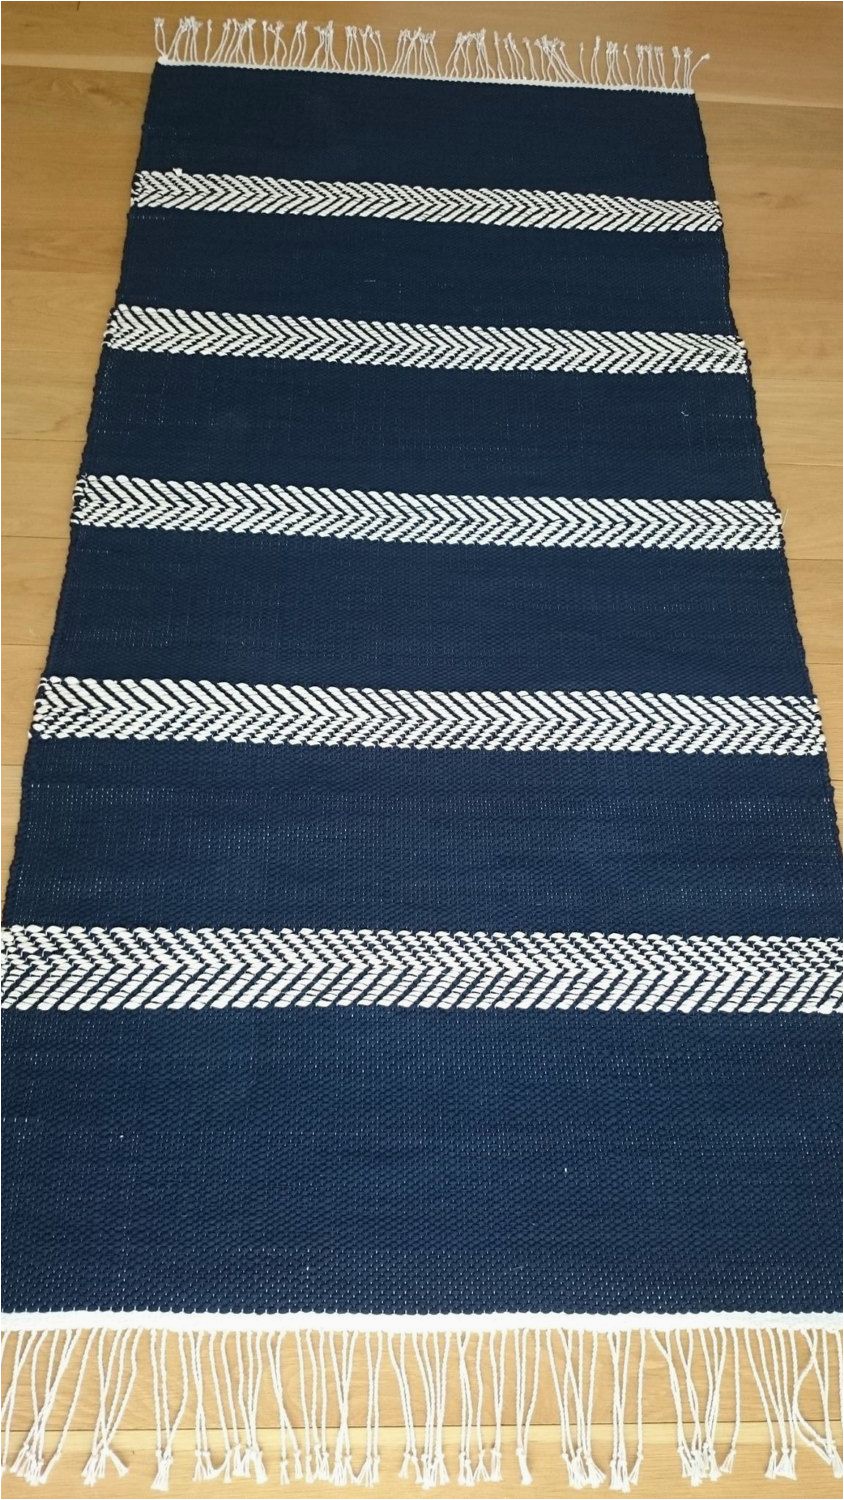 Blue and White Rug Runner Blue and White Rug with Stripes Striped Floor Runner Navy